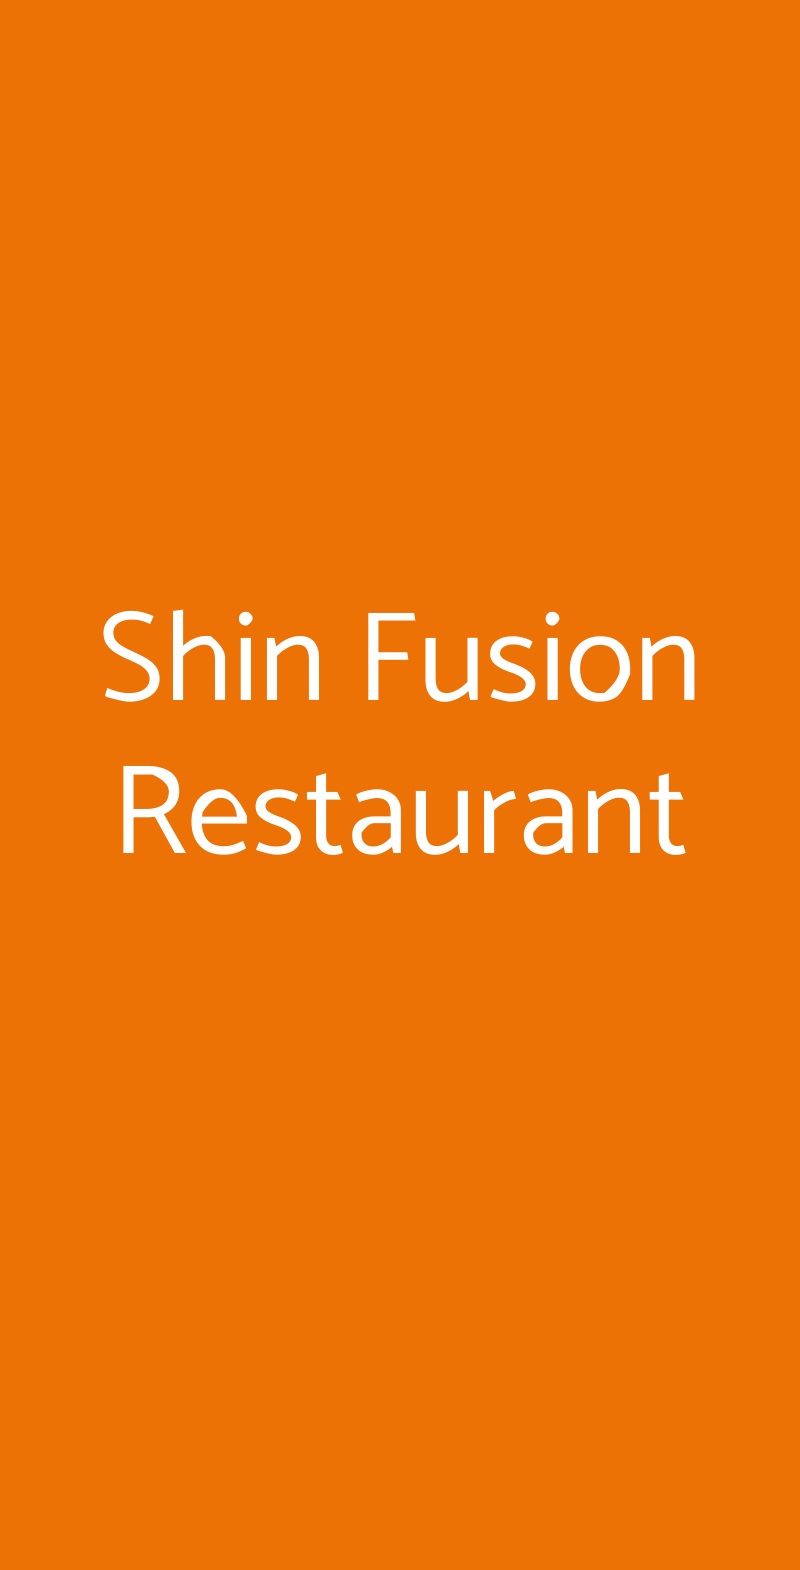 Shin Fusion Restaurant Milano menù 1 pagina